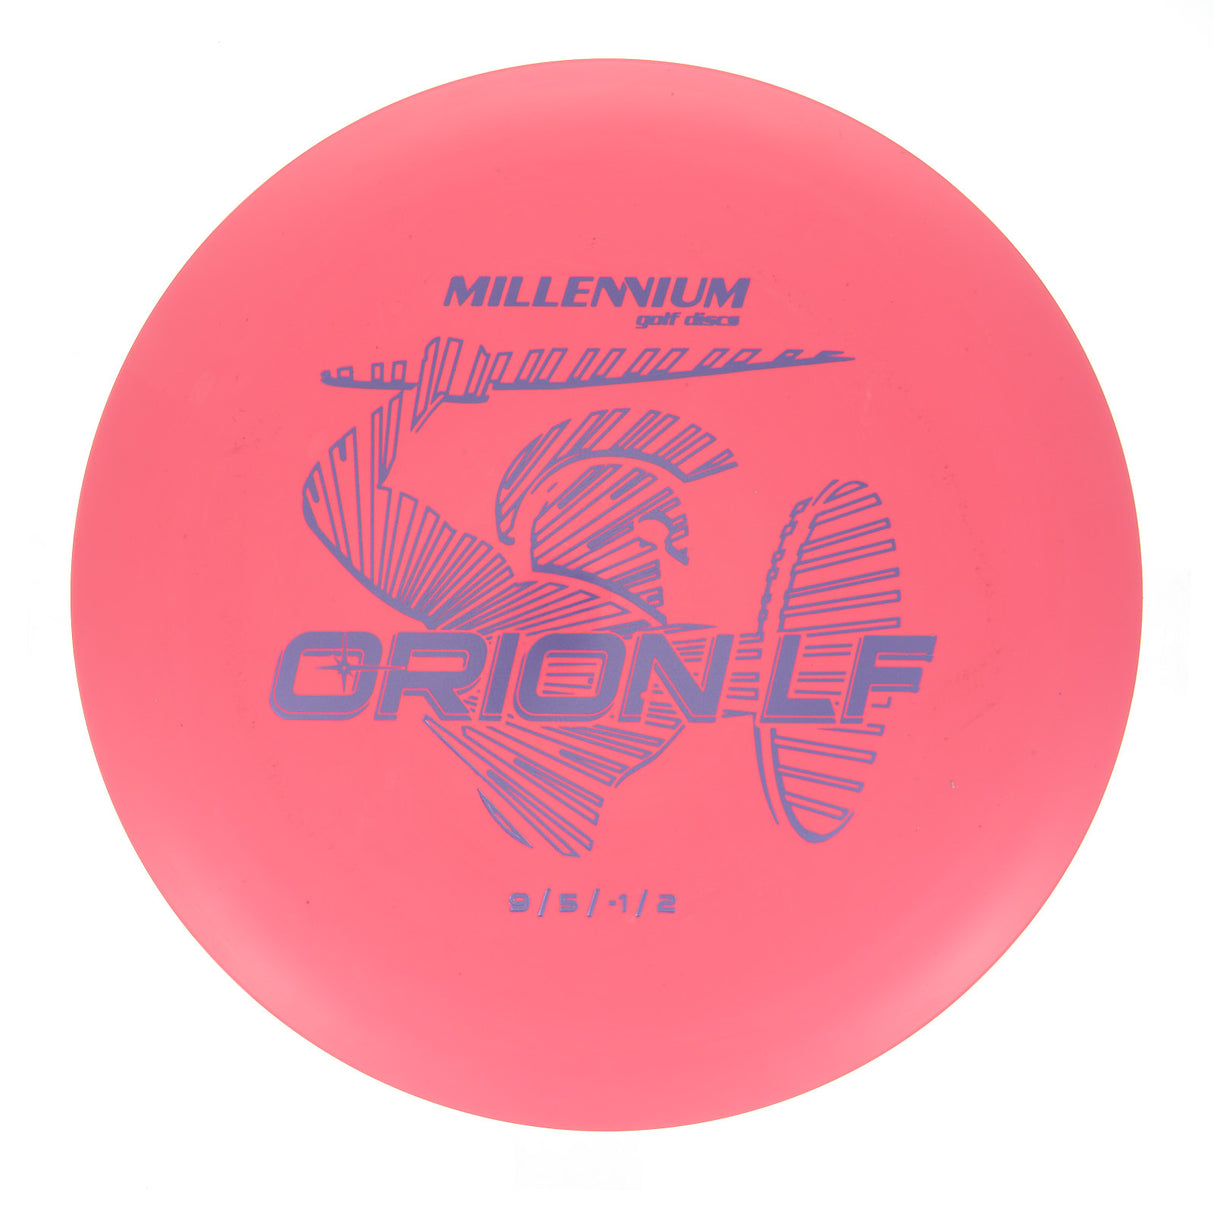 Millennium Orion LF - Standard 163g | Style 0001